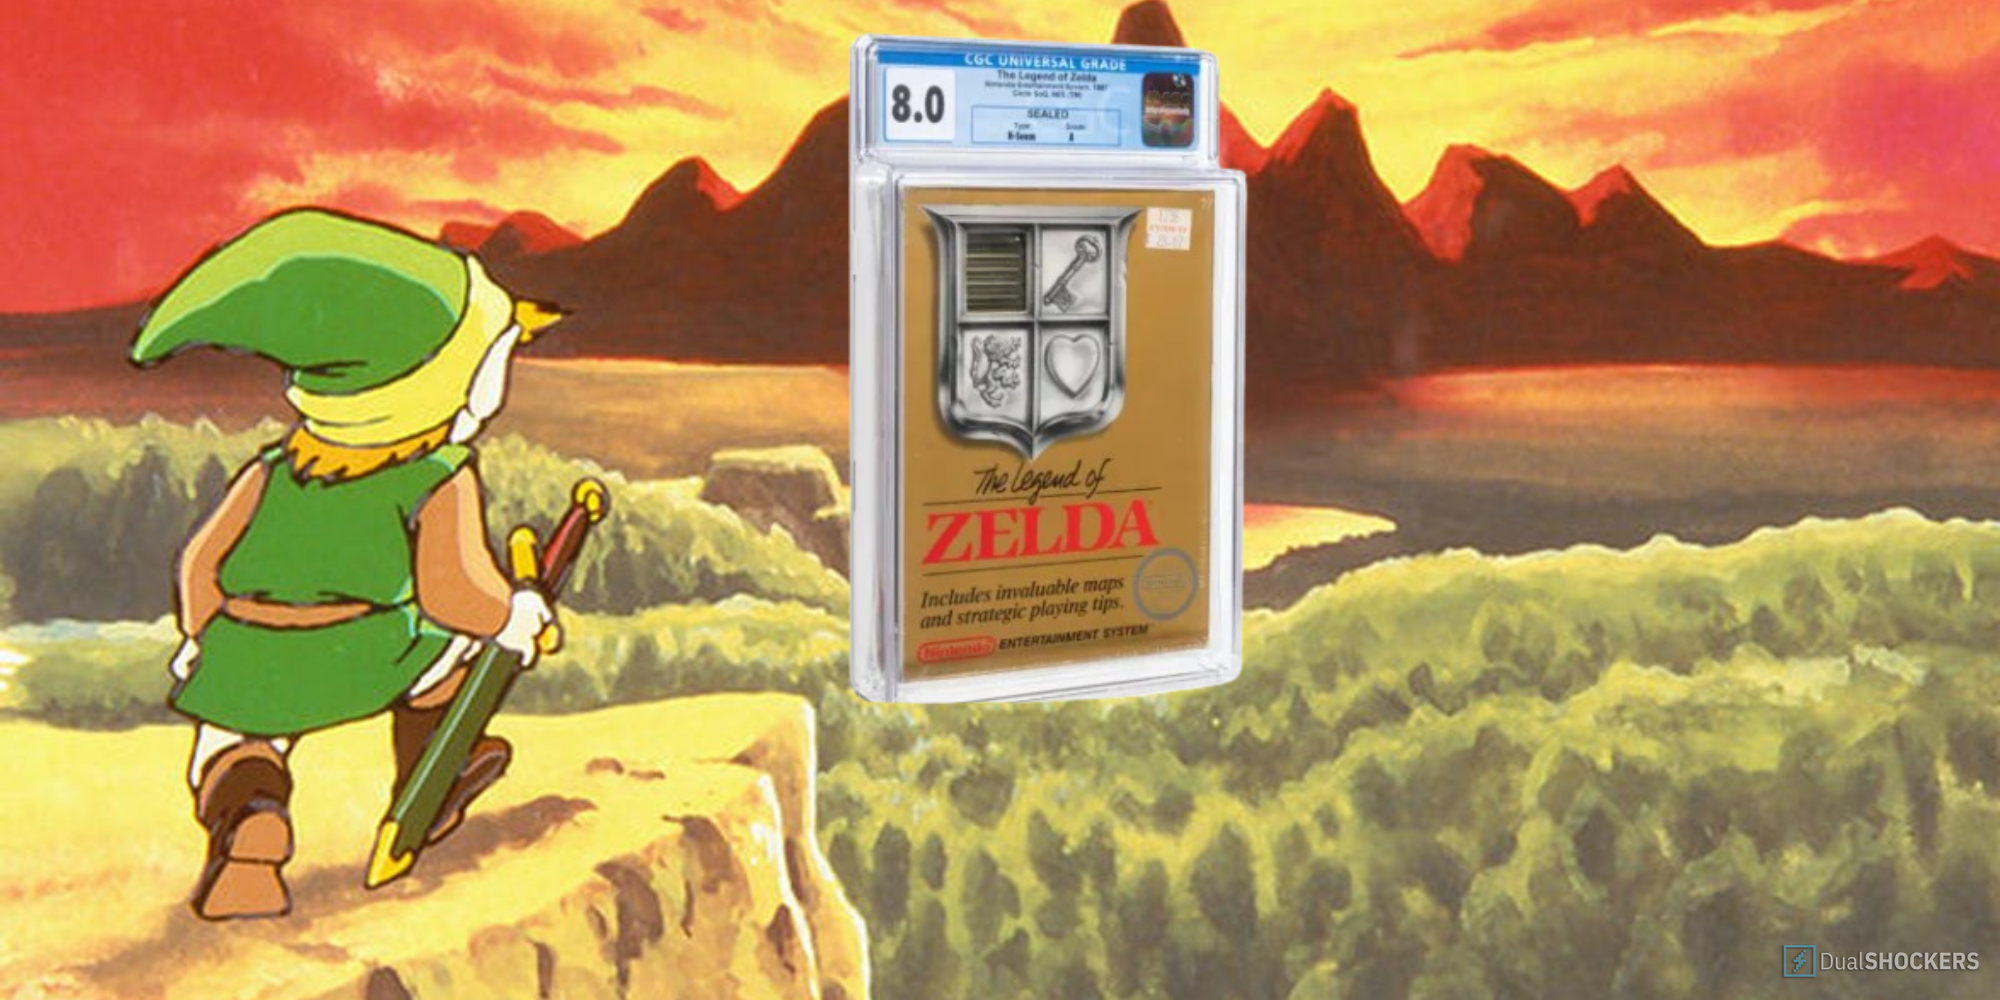 Rare Sealed Zelda Game Graded at $700,000 Was Almost Sold For $17K